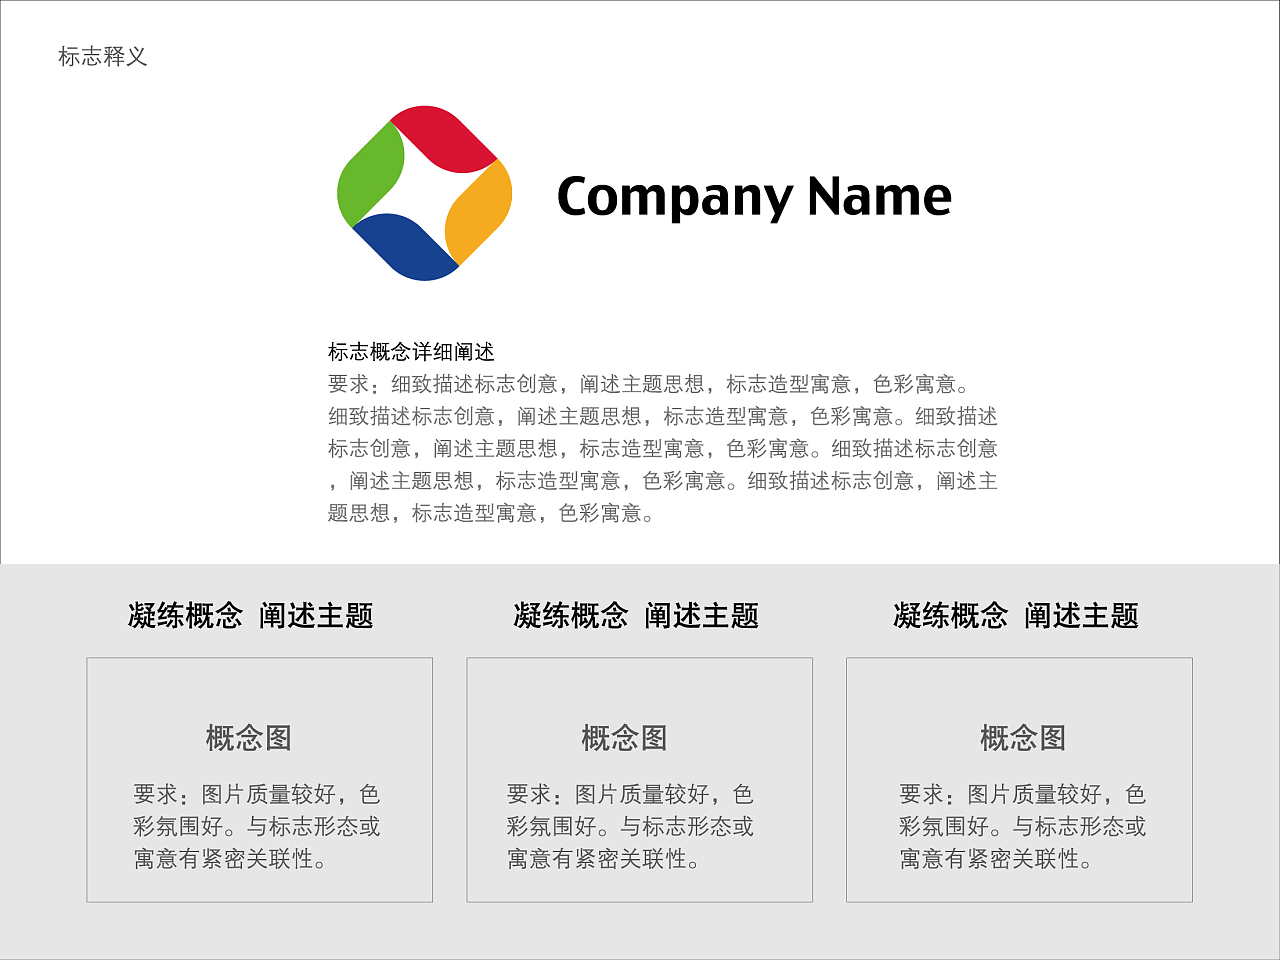 company name logo